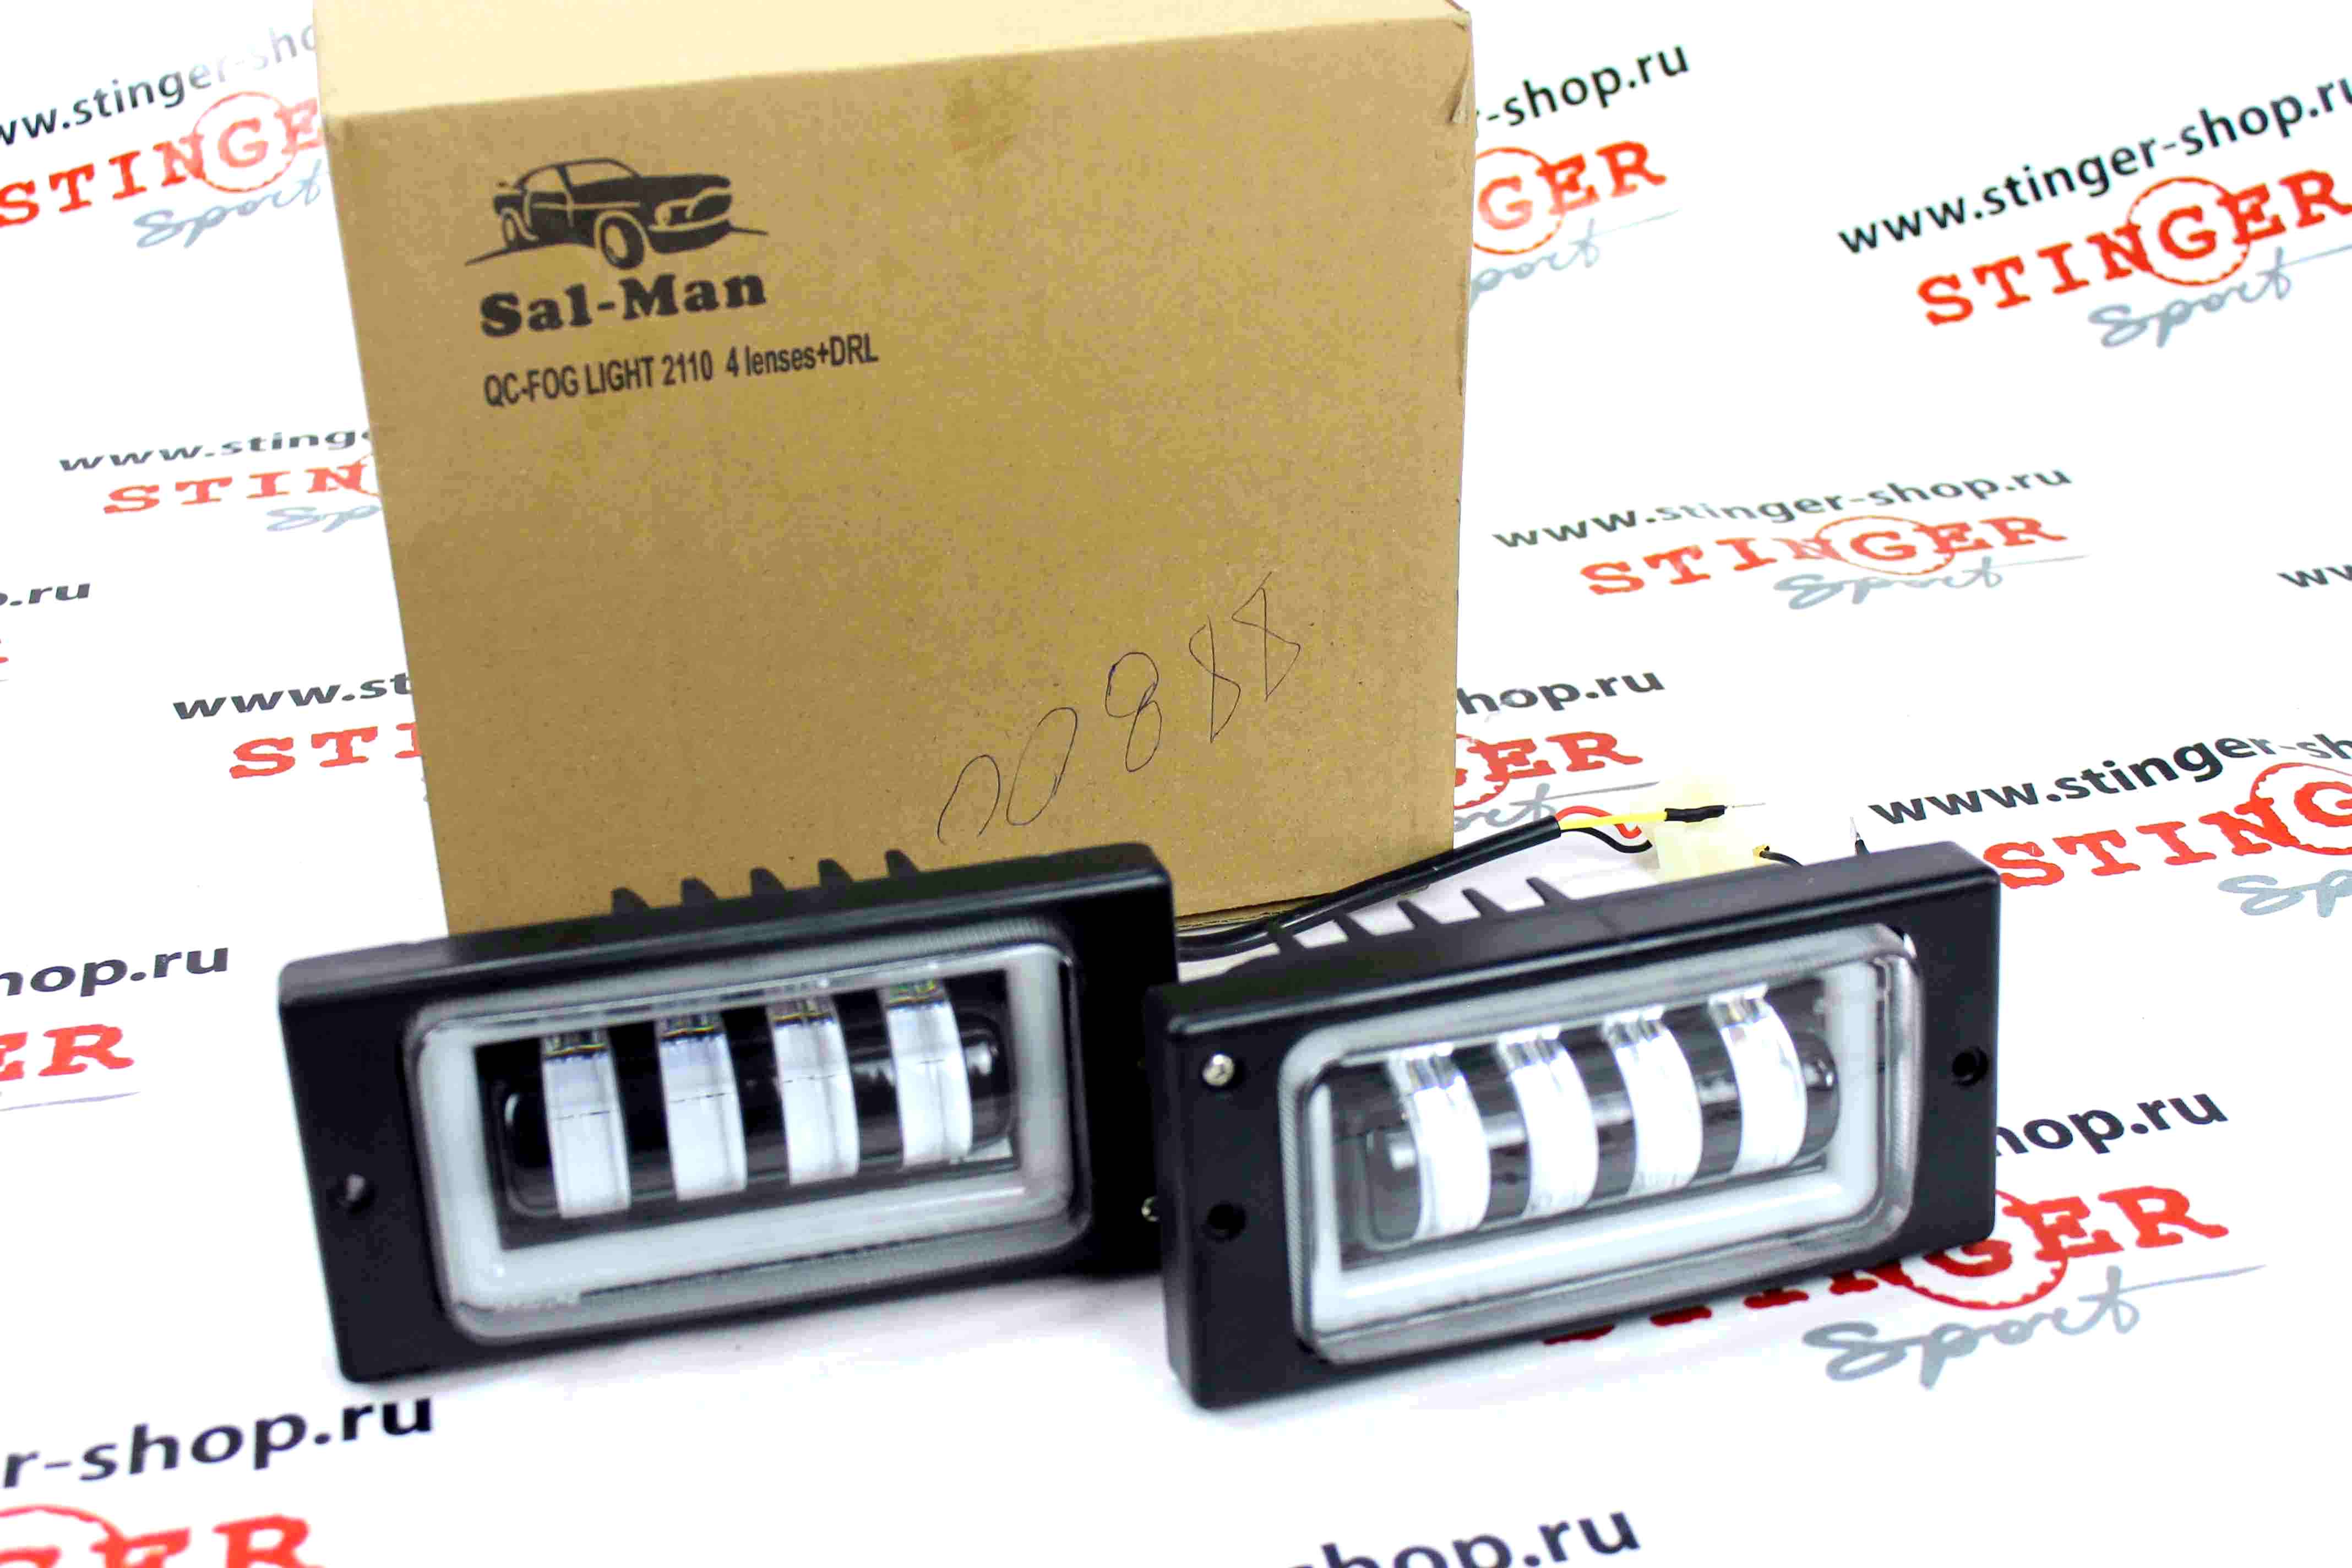 ПТФ Sal-Man для  ВАЗ 2110  ВАЗ 2114  ВАЗ 2123 (до 2009 г.в.), диодные, с ДХО, 40W (2 шт) . Фото �2